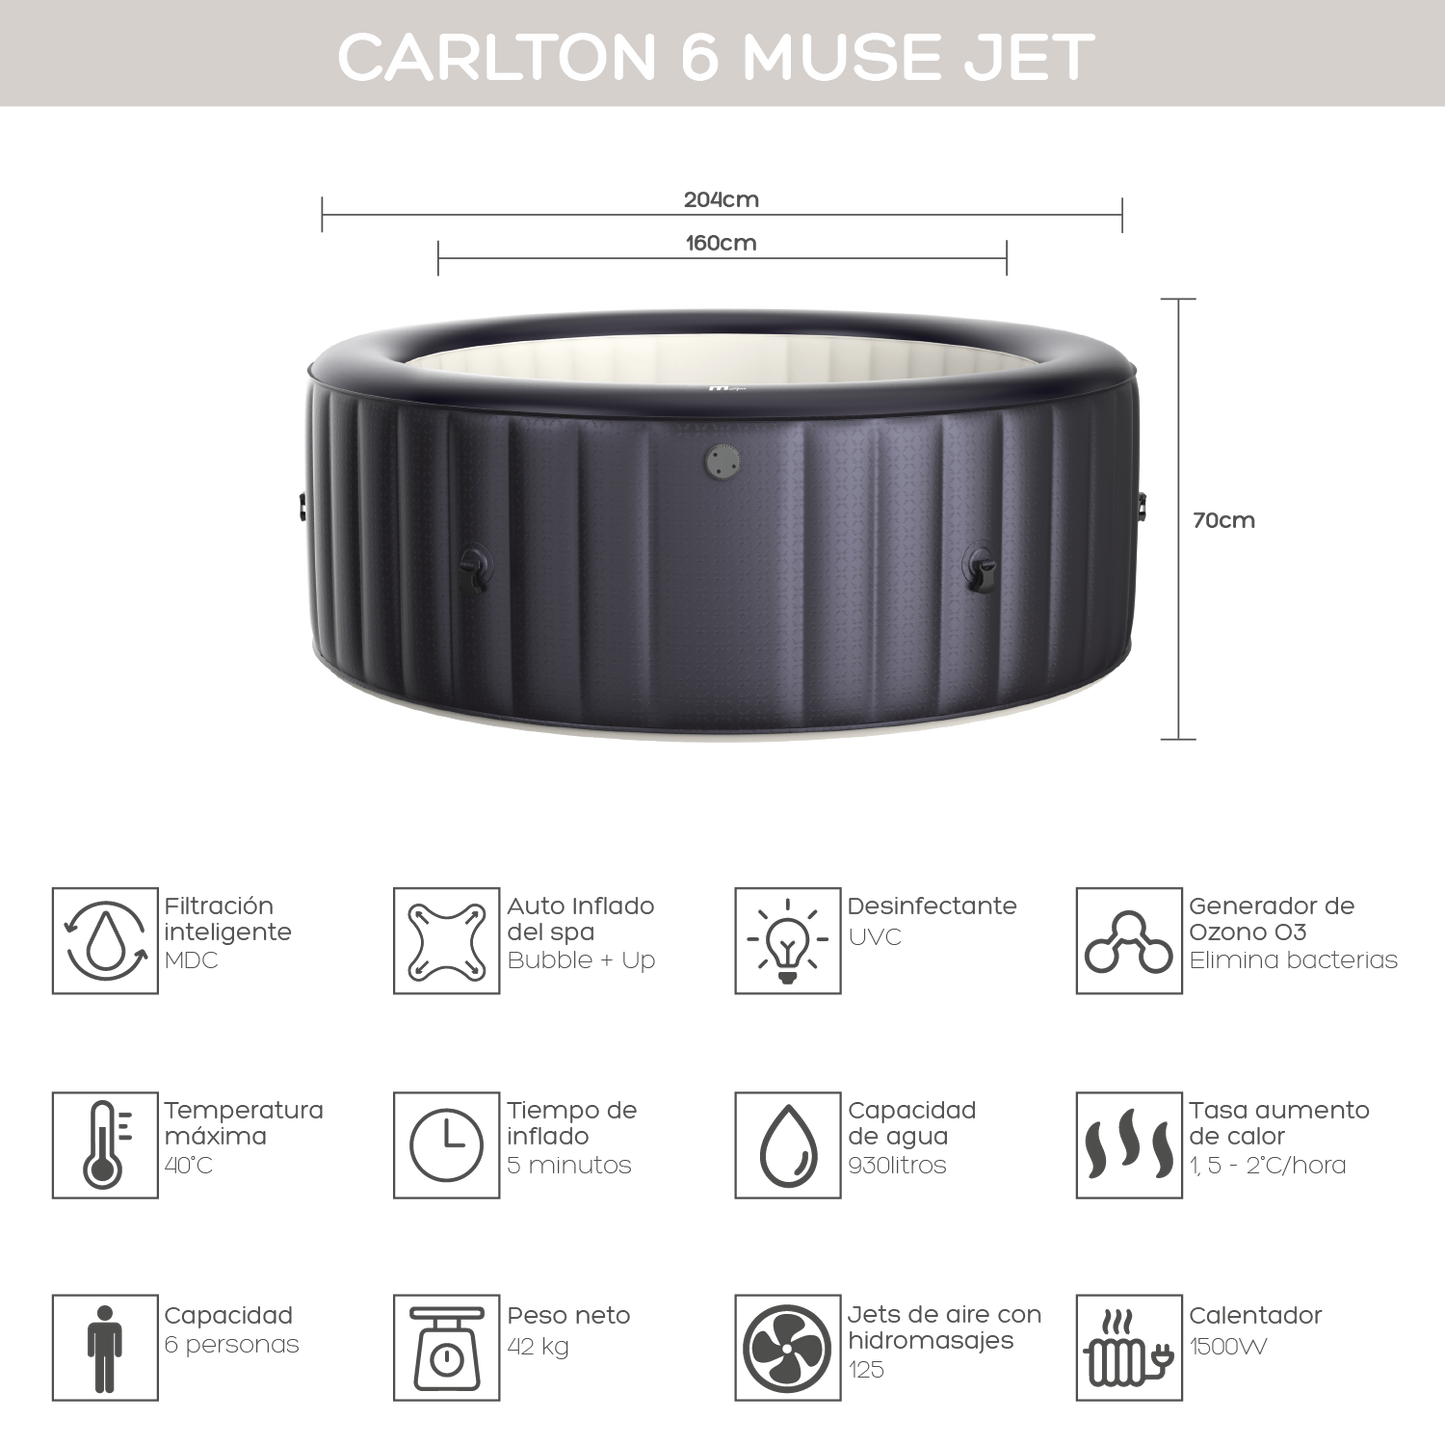 Hot Tub Carlton 6 Muse Jet